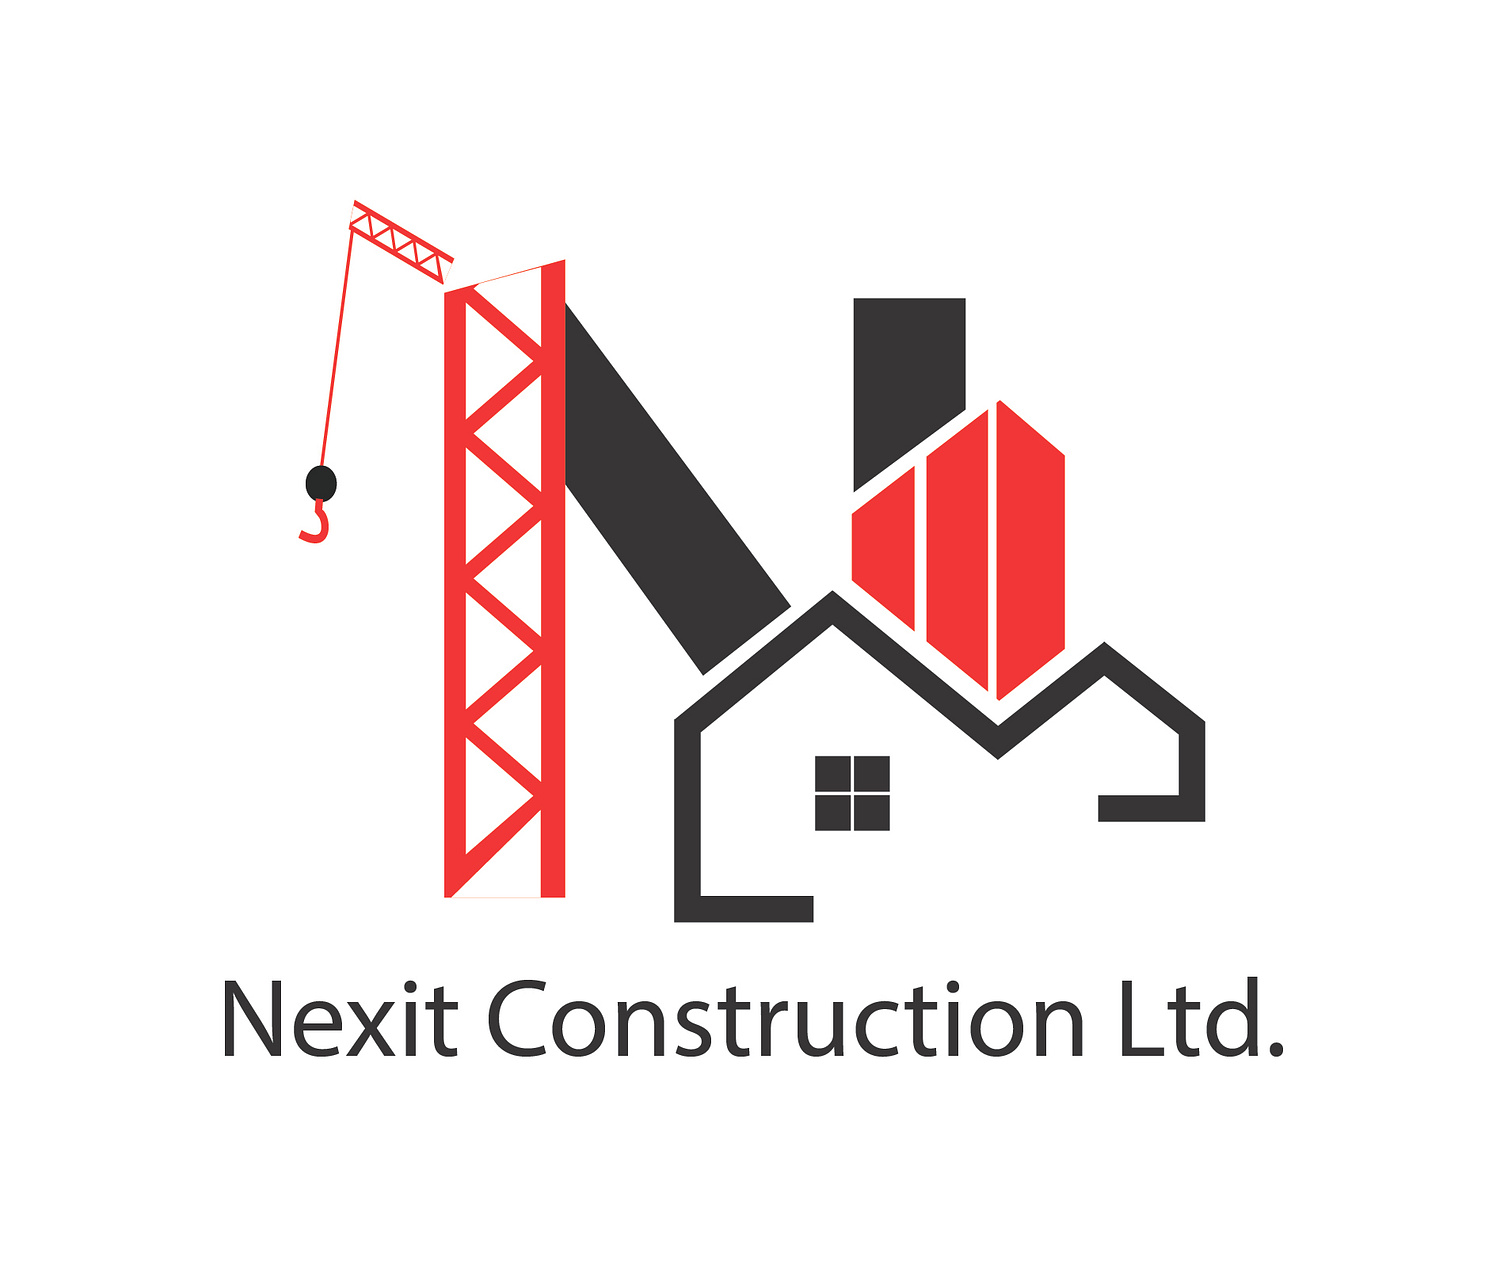 Nexit Construction Logo by Muhammad Abdullah on Dribbble